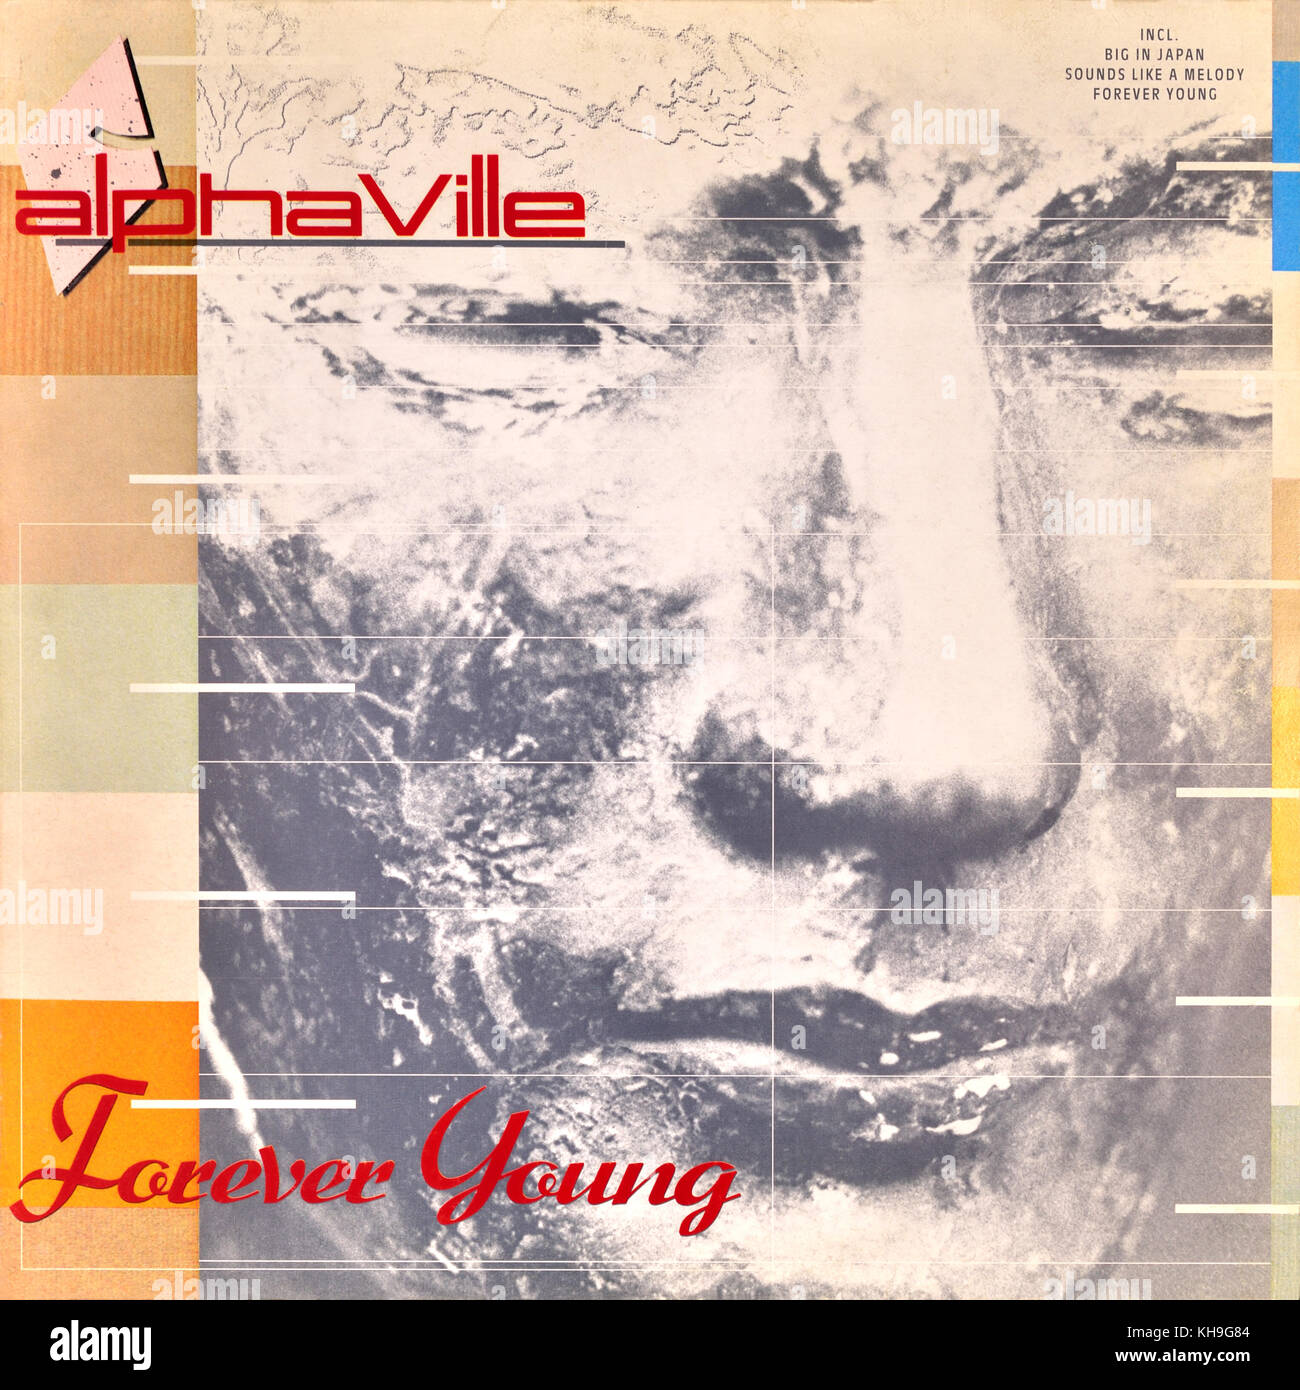 Alphaville - original vinyl album cover - Forever Young - 1984 Stock Photo